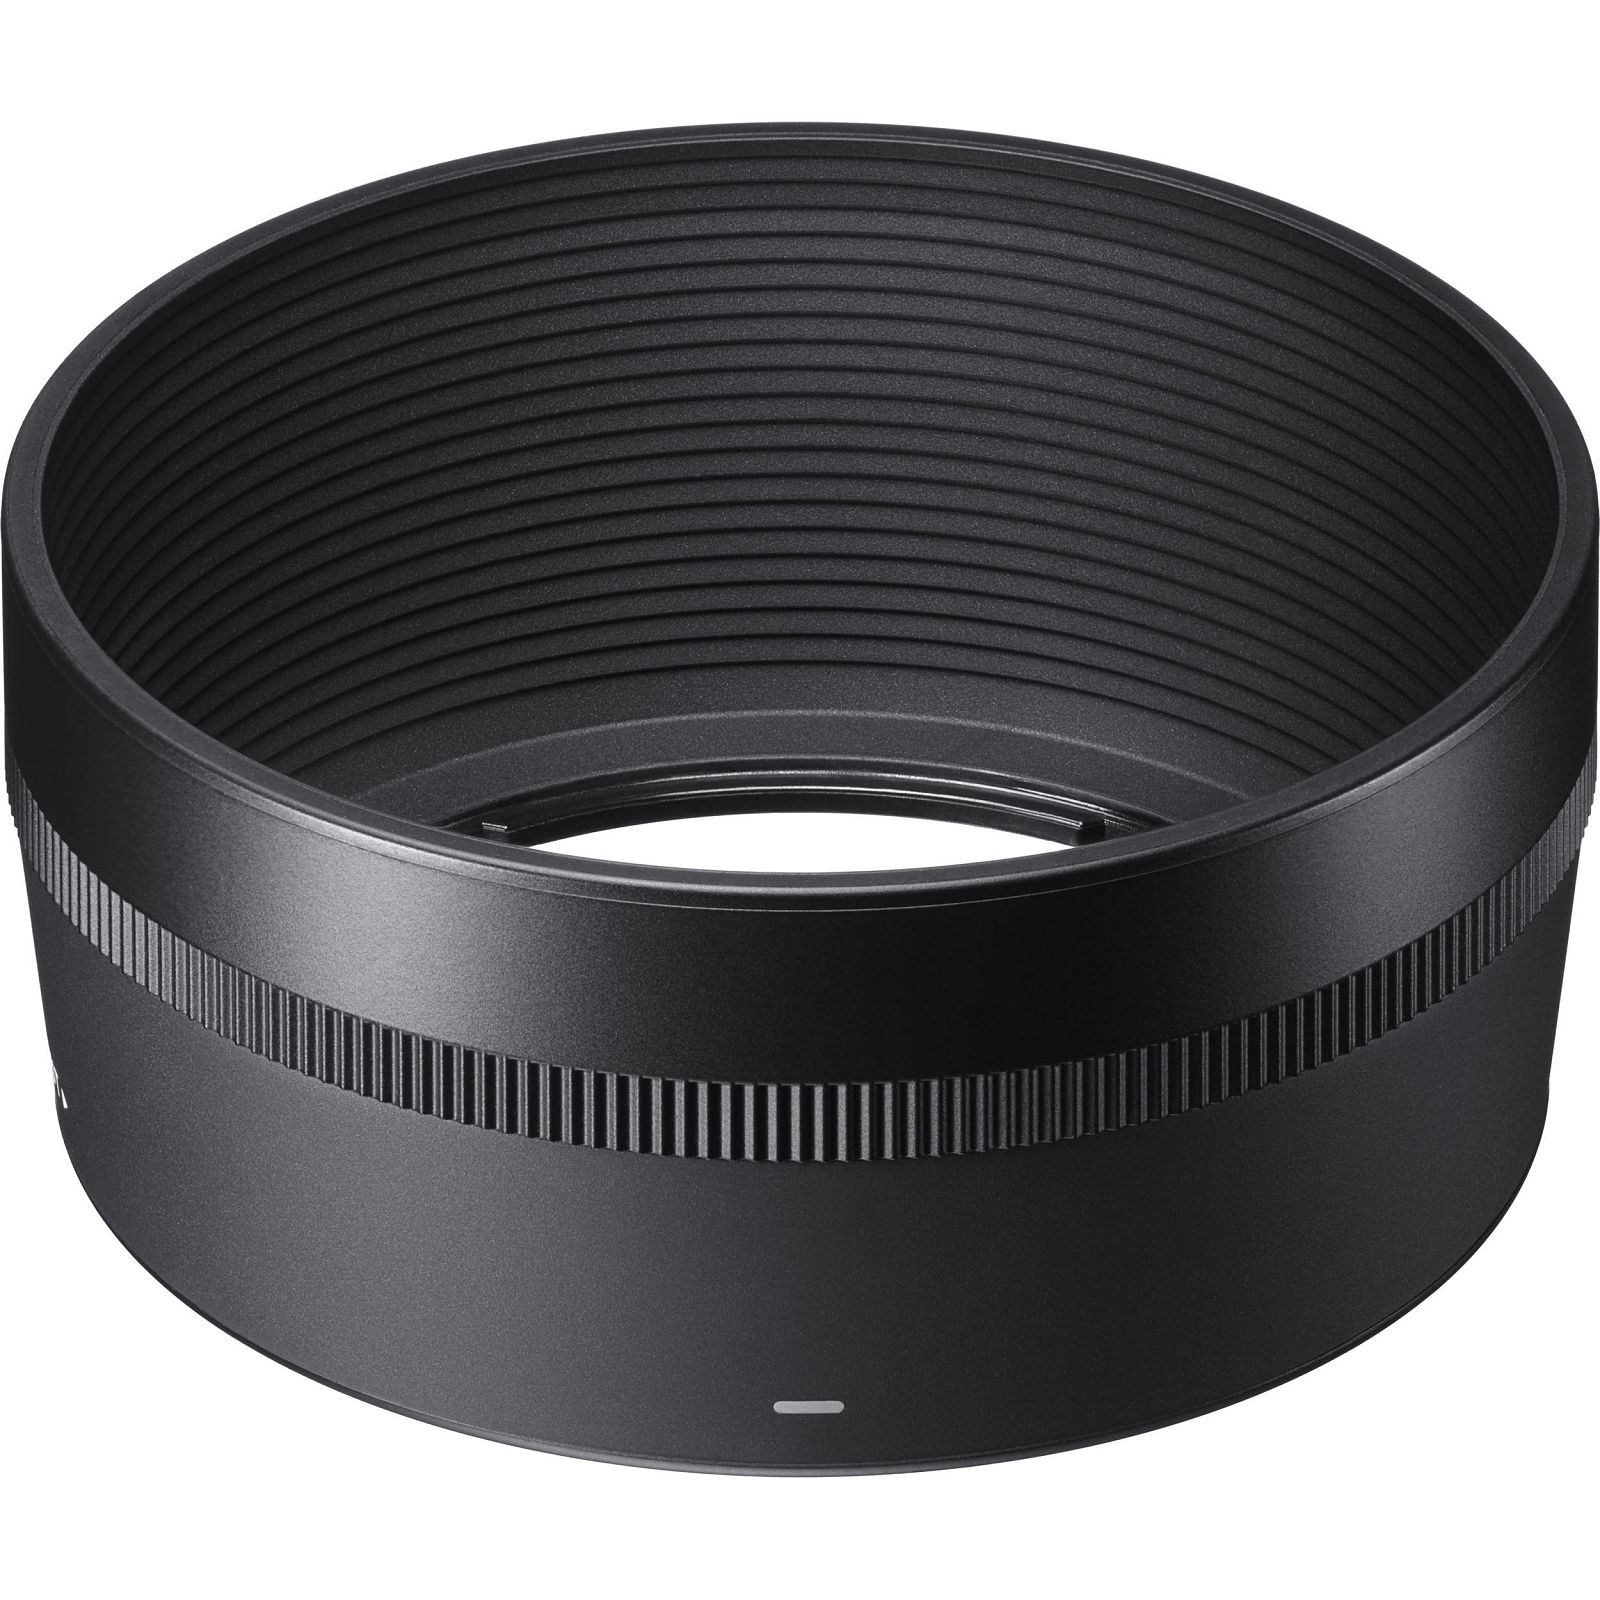 Sigma 30mm f/1.4 DC DN Contemporary Black širokokutni objektiv za Sony E-mount prime lens 30 F/1,4 30 F1.4 f/1.4 (302965)